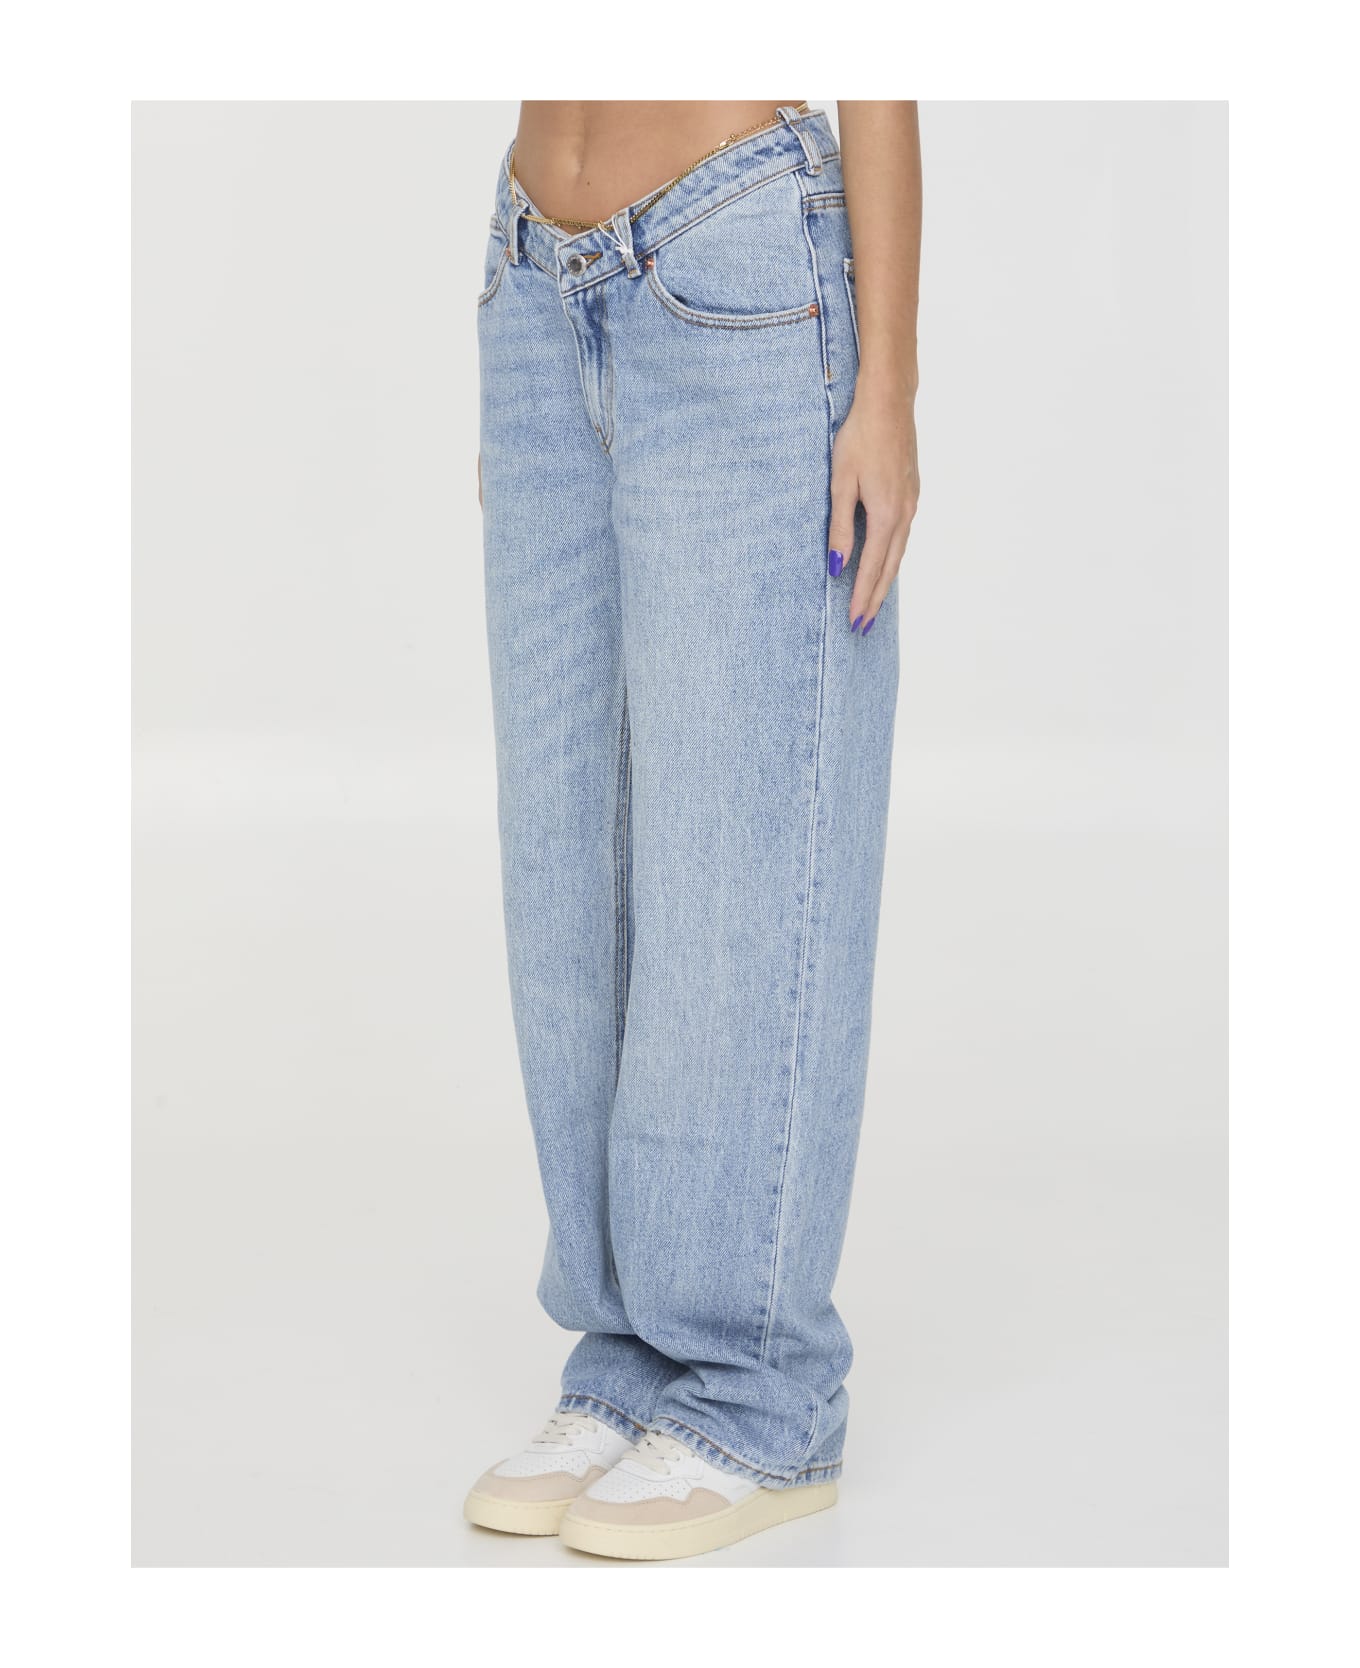 Alexander Wang Denim Jeans With Nameplate - Blu デニム